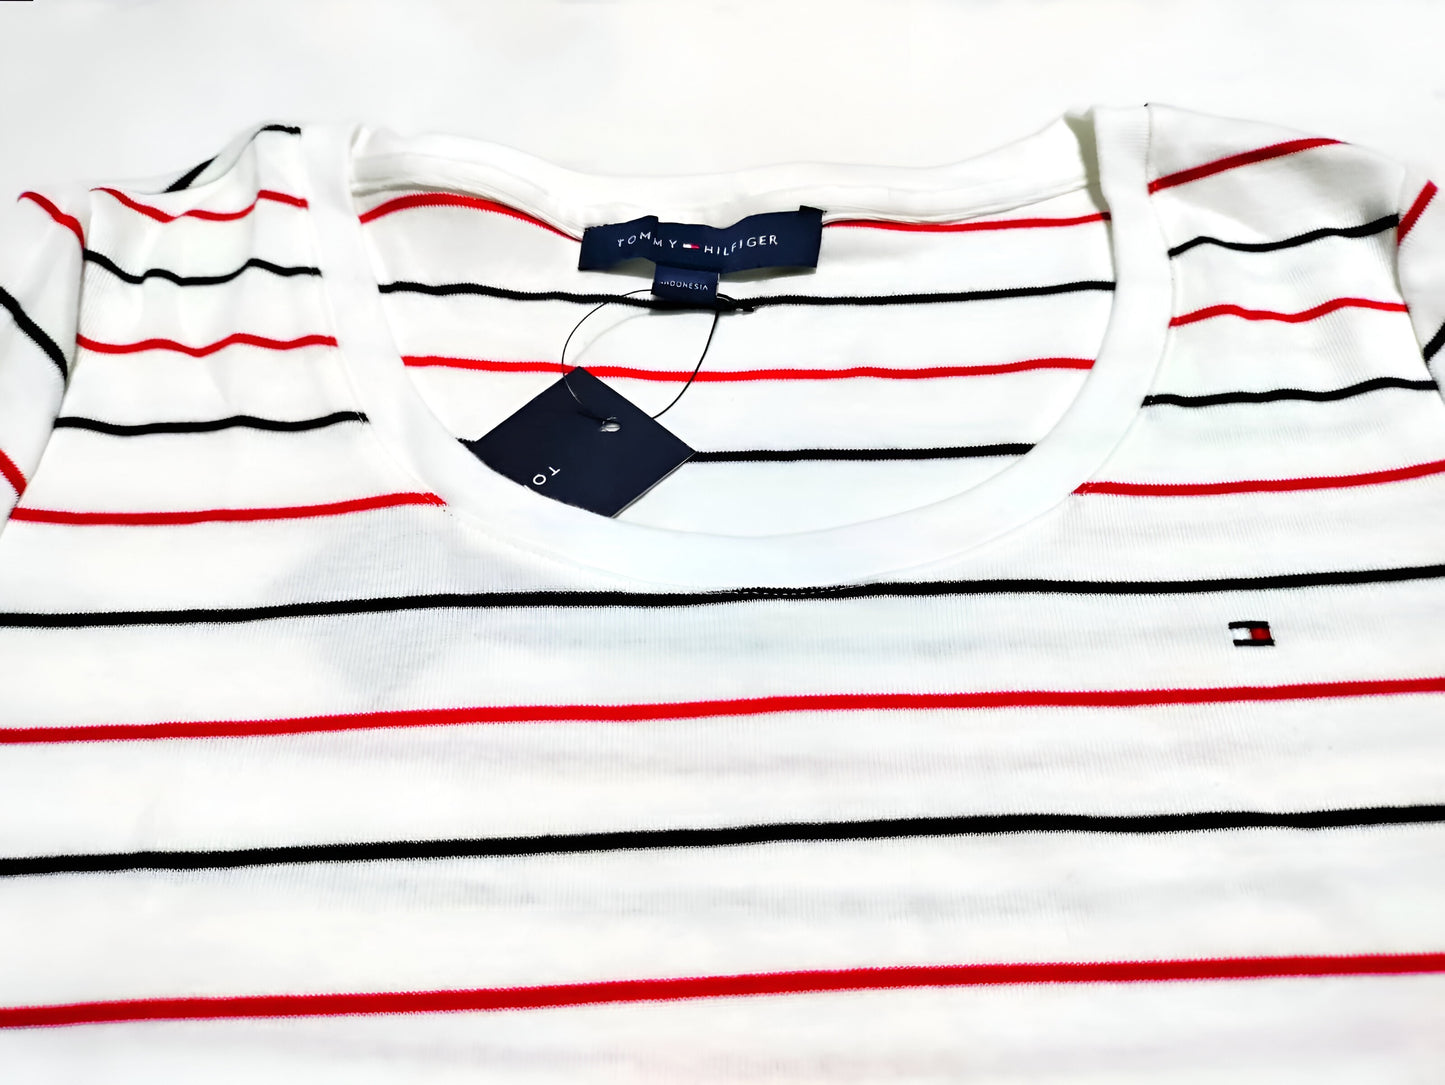 Camiseta/ Polo de mujer Tommy Hilfiger, diseño a rayas, manga corta - Cuello redondo